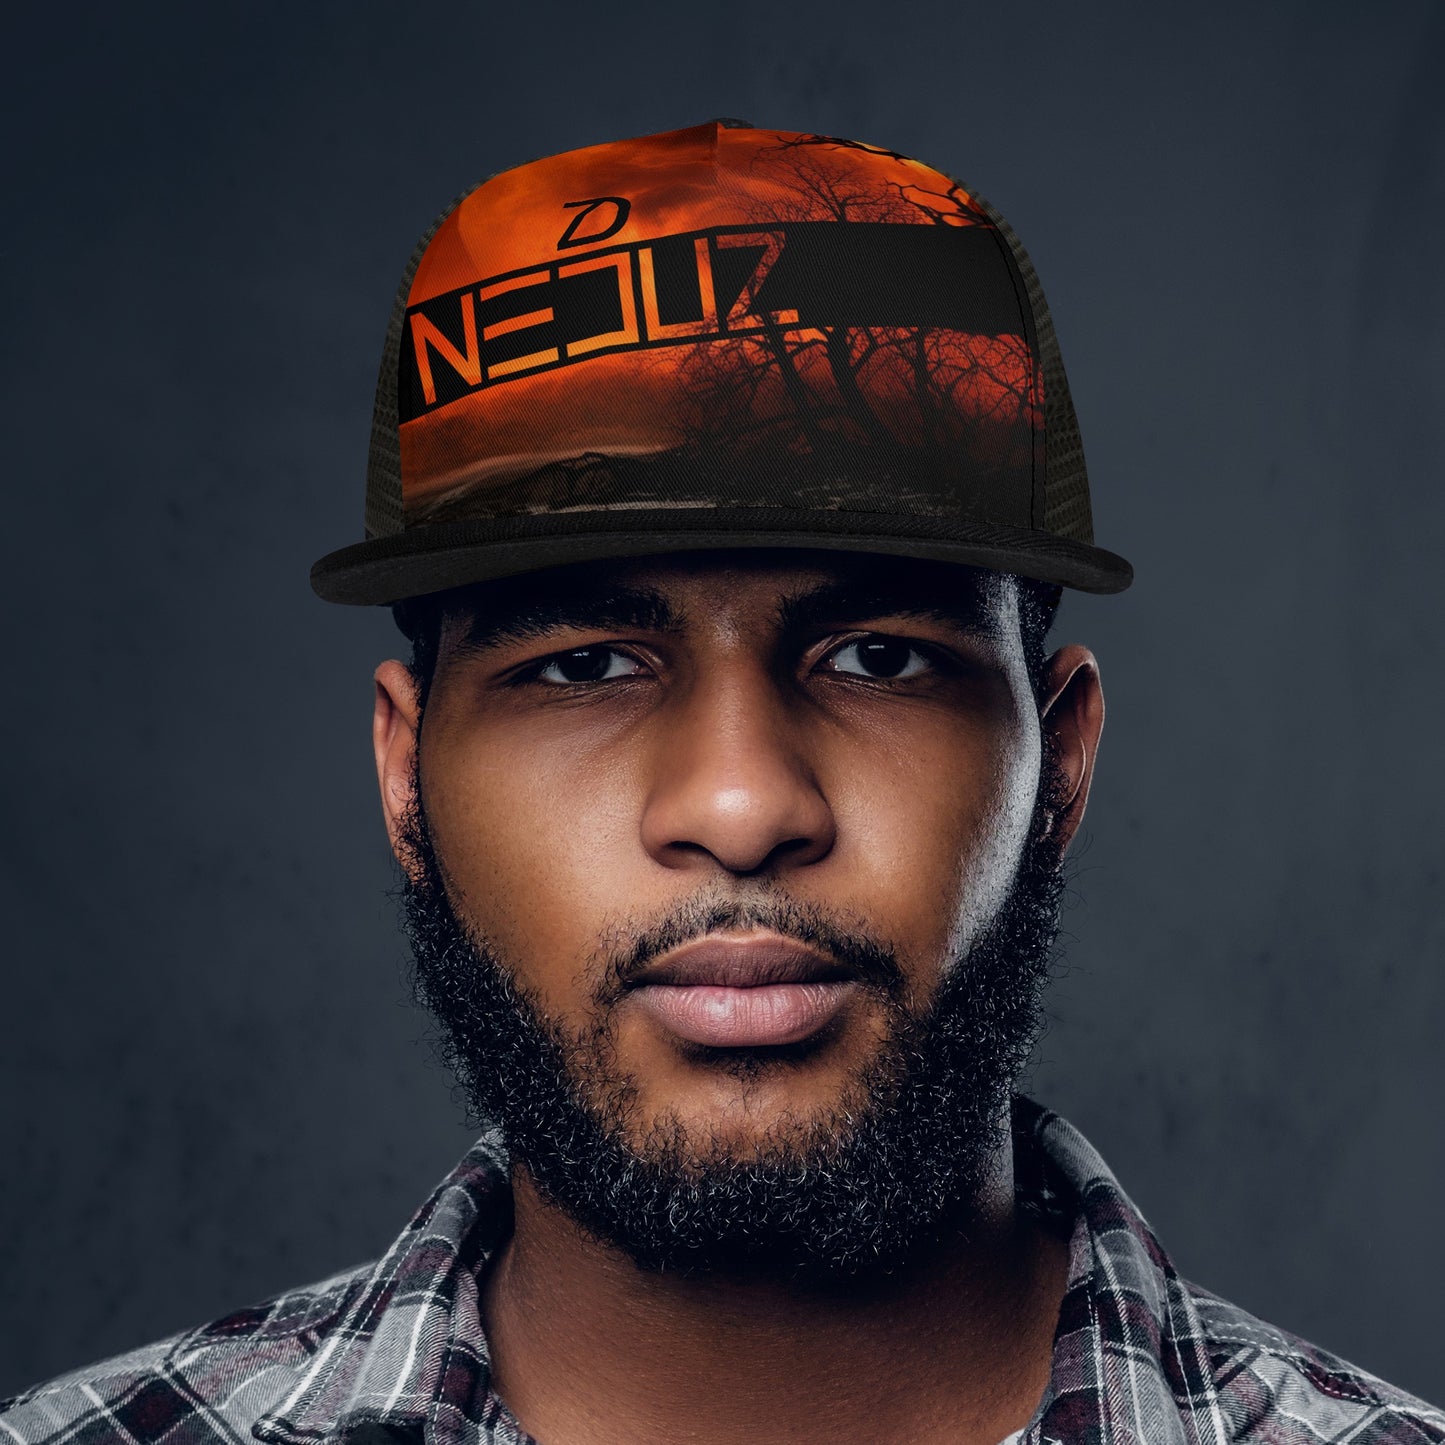 Neduz Crimson Sun Mesh Hip Hop Hat: Show Off Your Style with Our Unique and Stylish Design